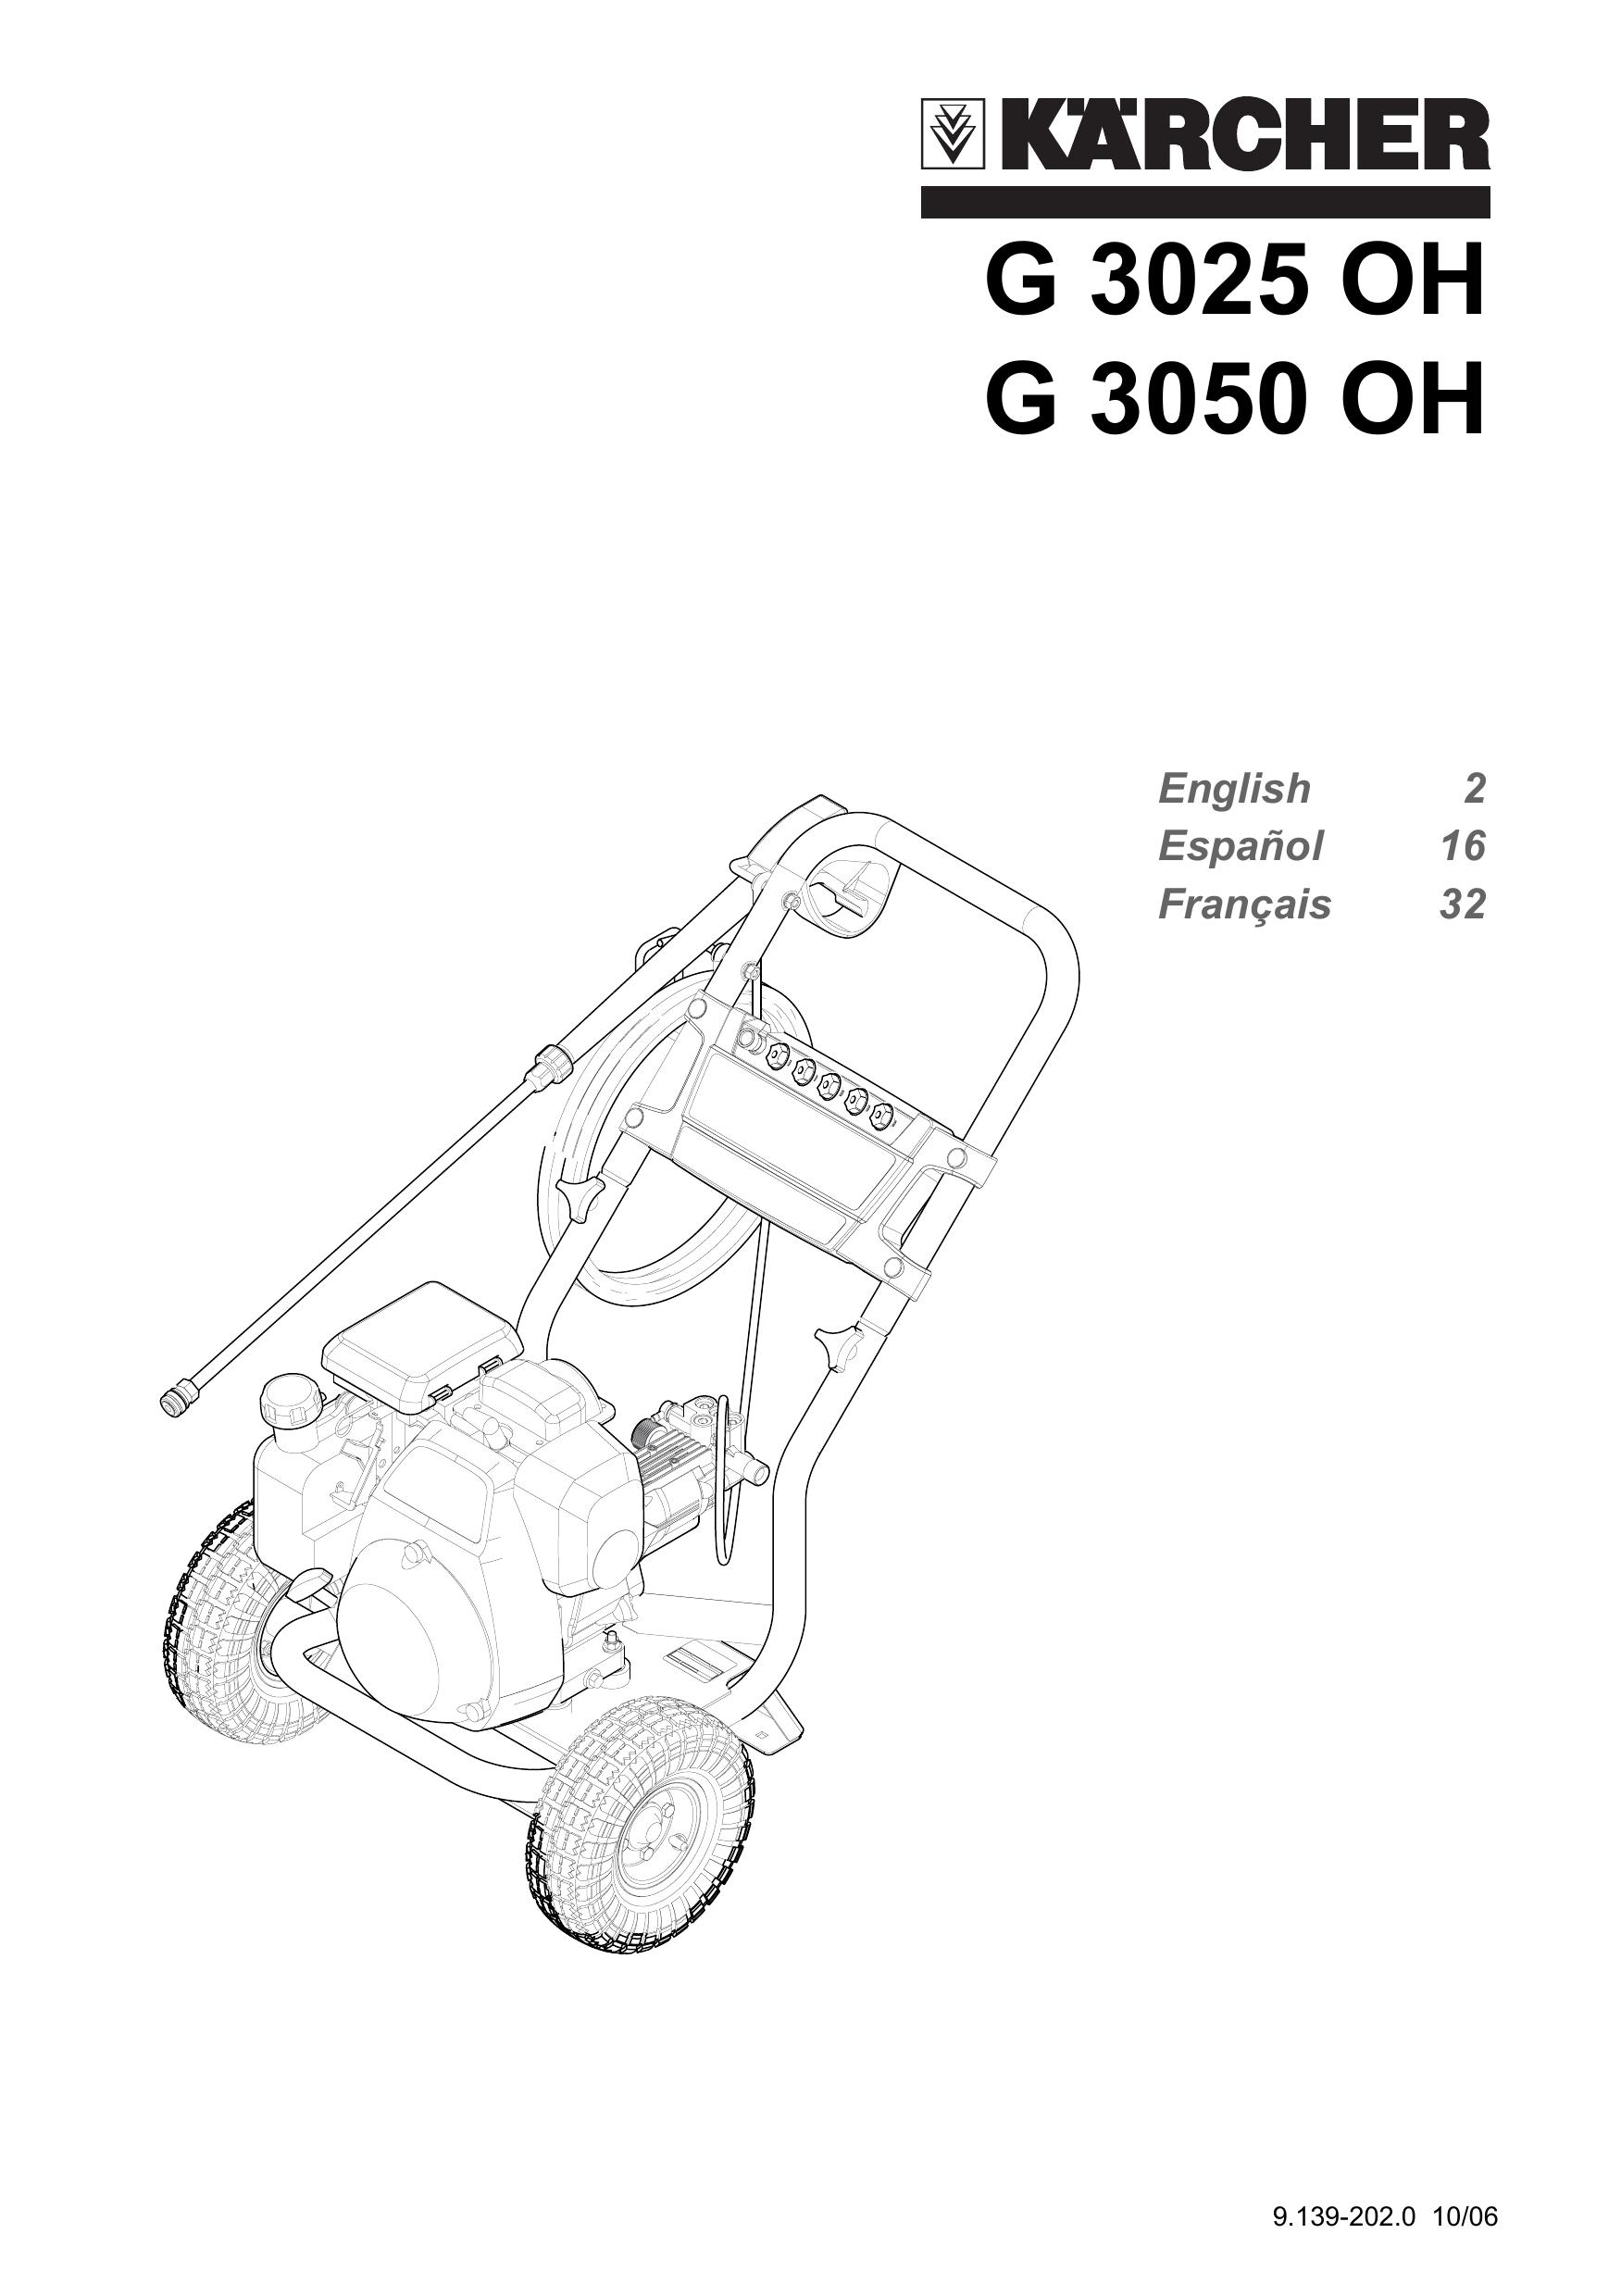 Karcher G 3050 OH Pressure Washer User Manual